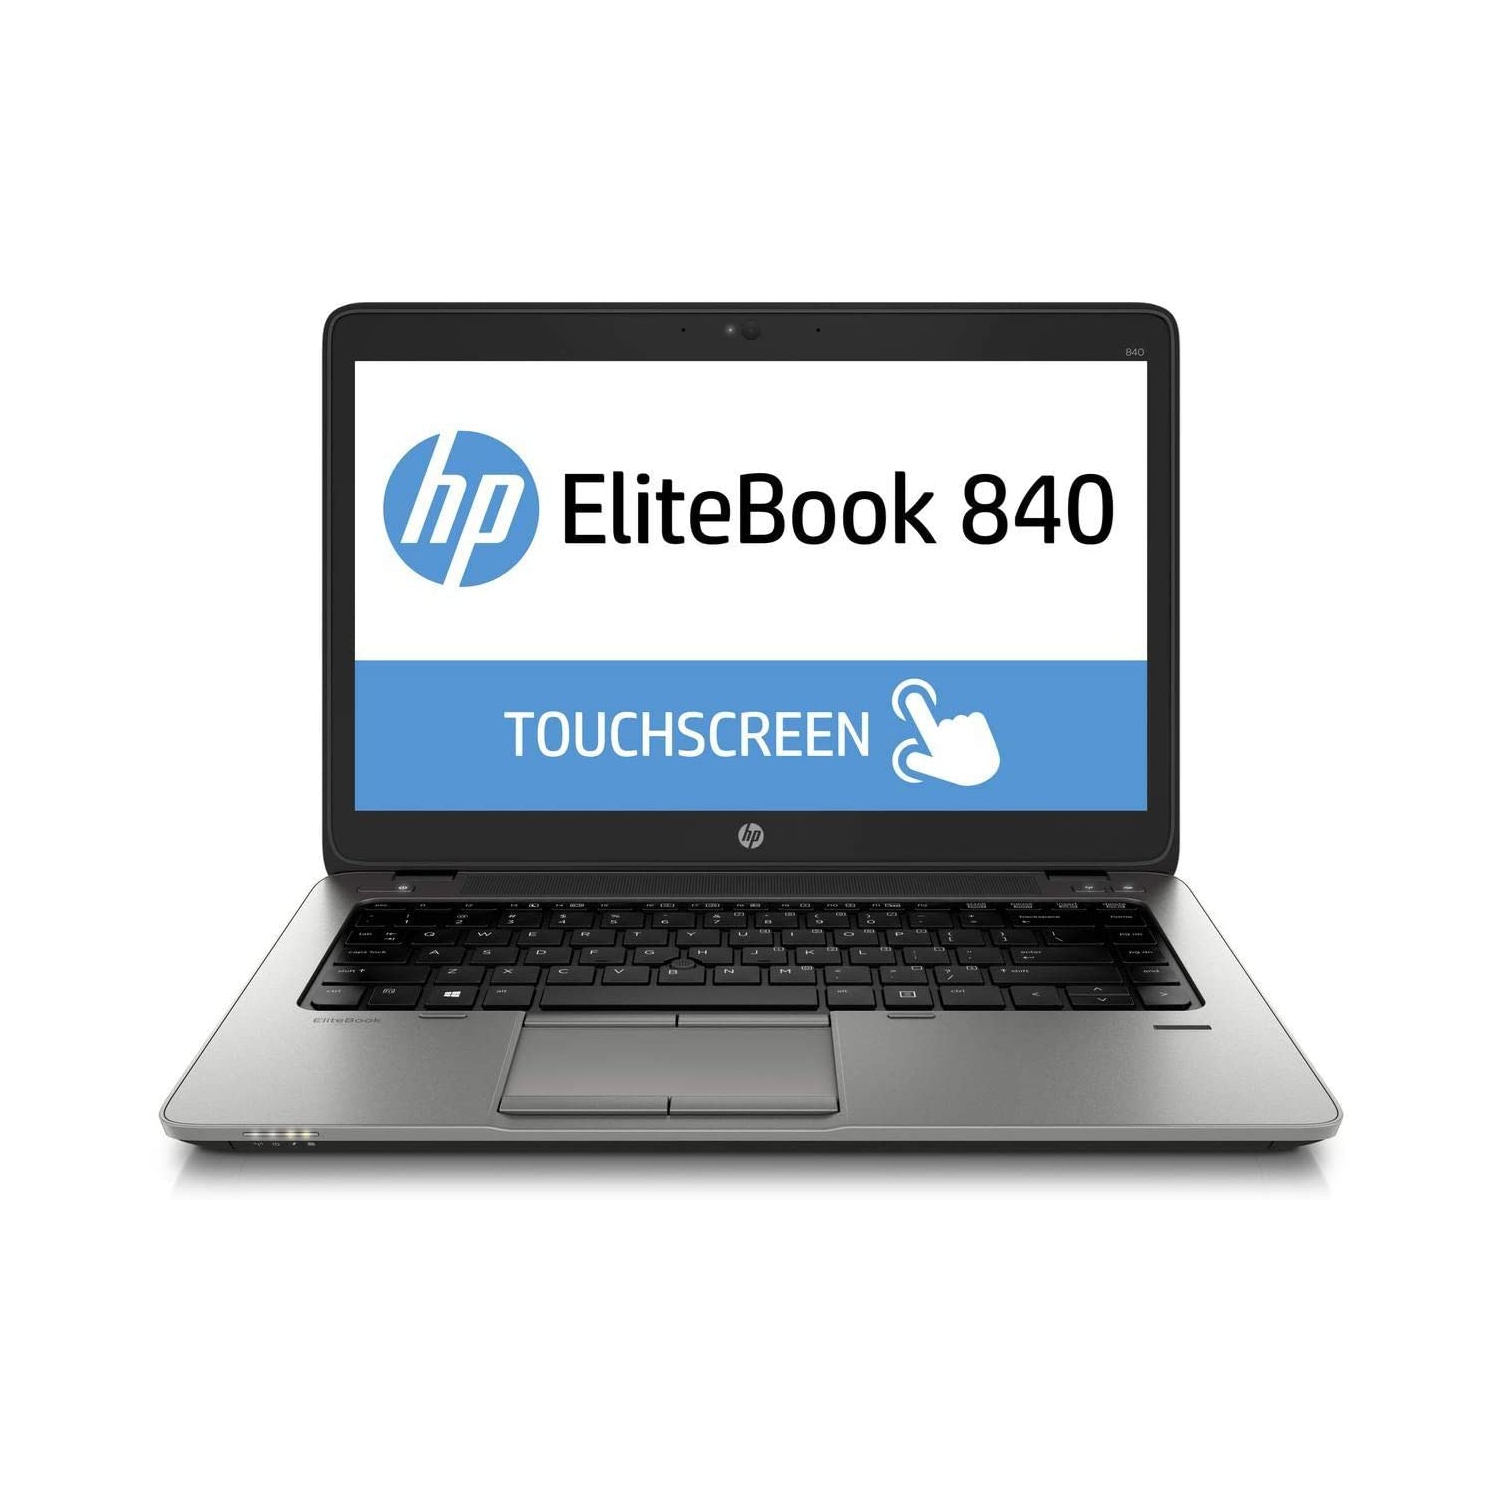 Refurbished (Good) - HP Elite book 840 G4 TOUCH SCREEN 14" Laptop, Intel Core i5-7300U, 8 GB DDR4 RAM, New 256 GB SSD, Windows 10 Professional